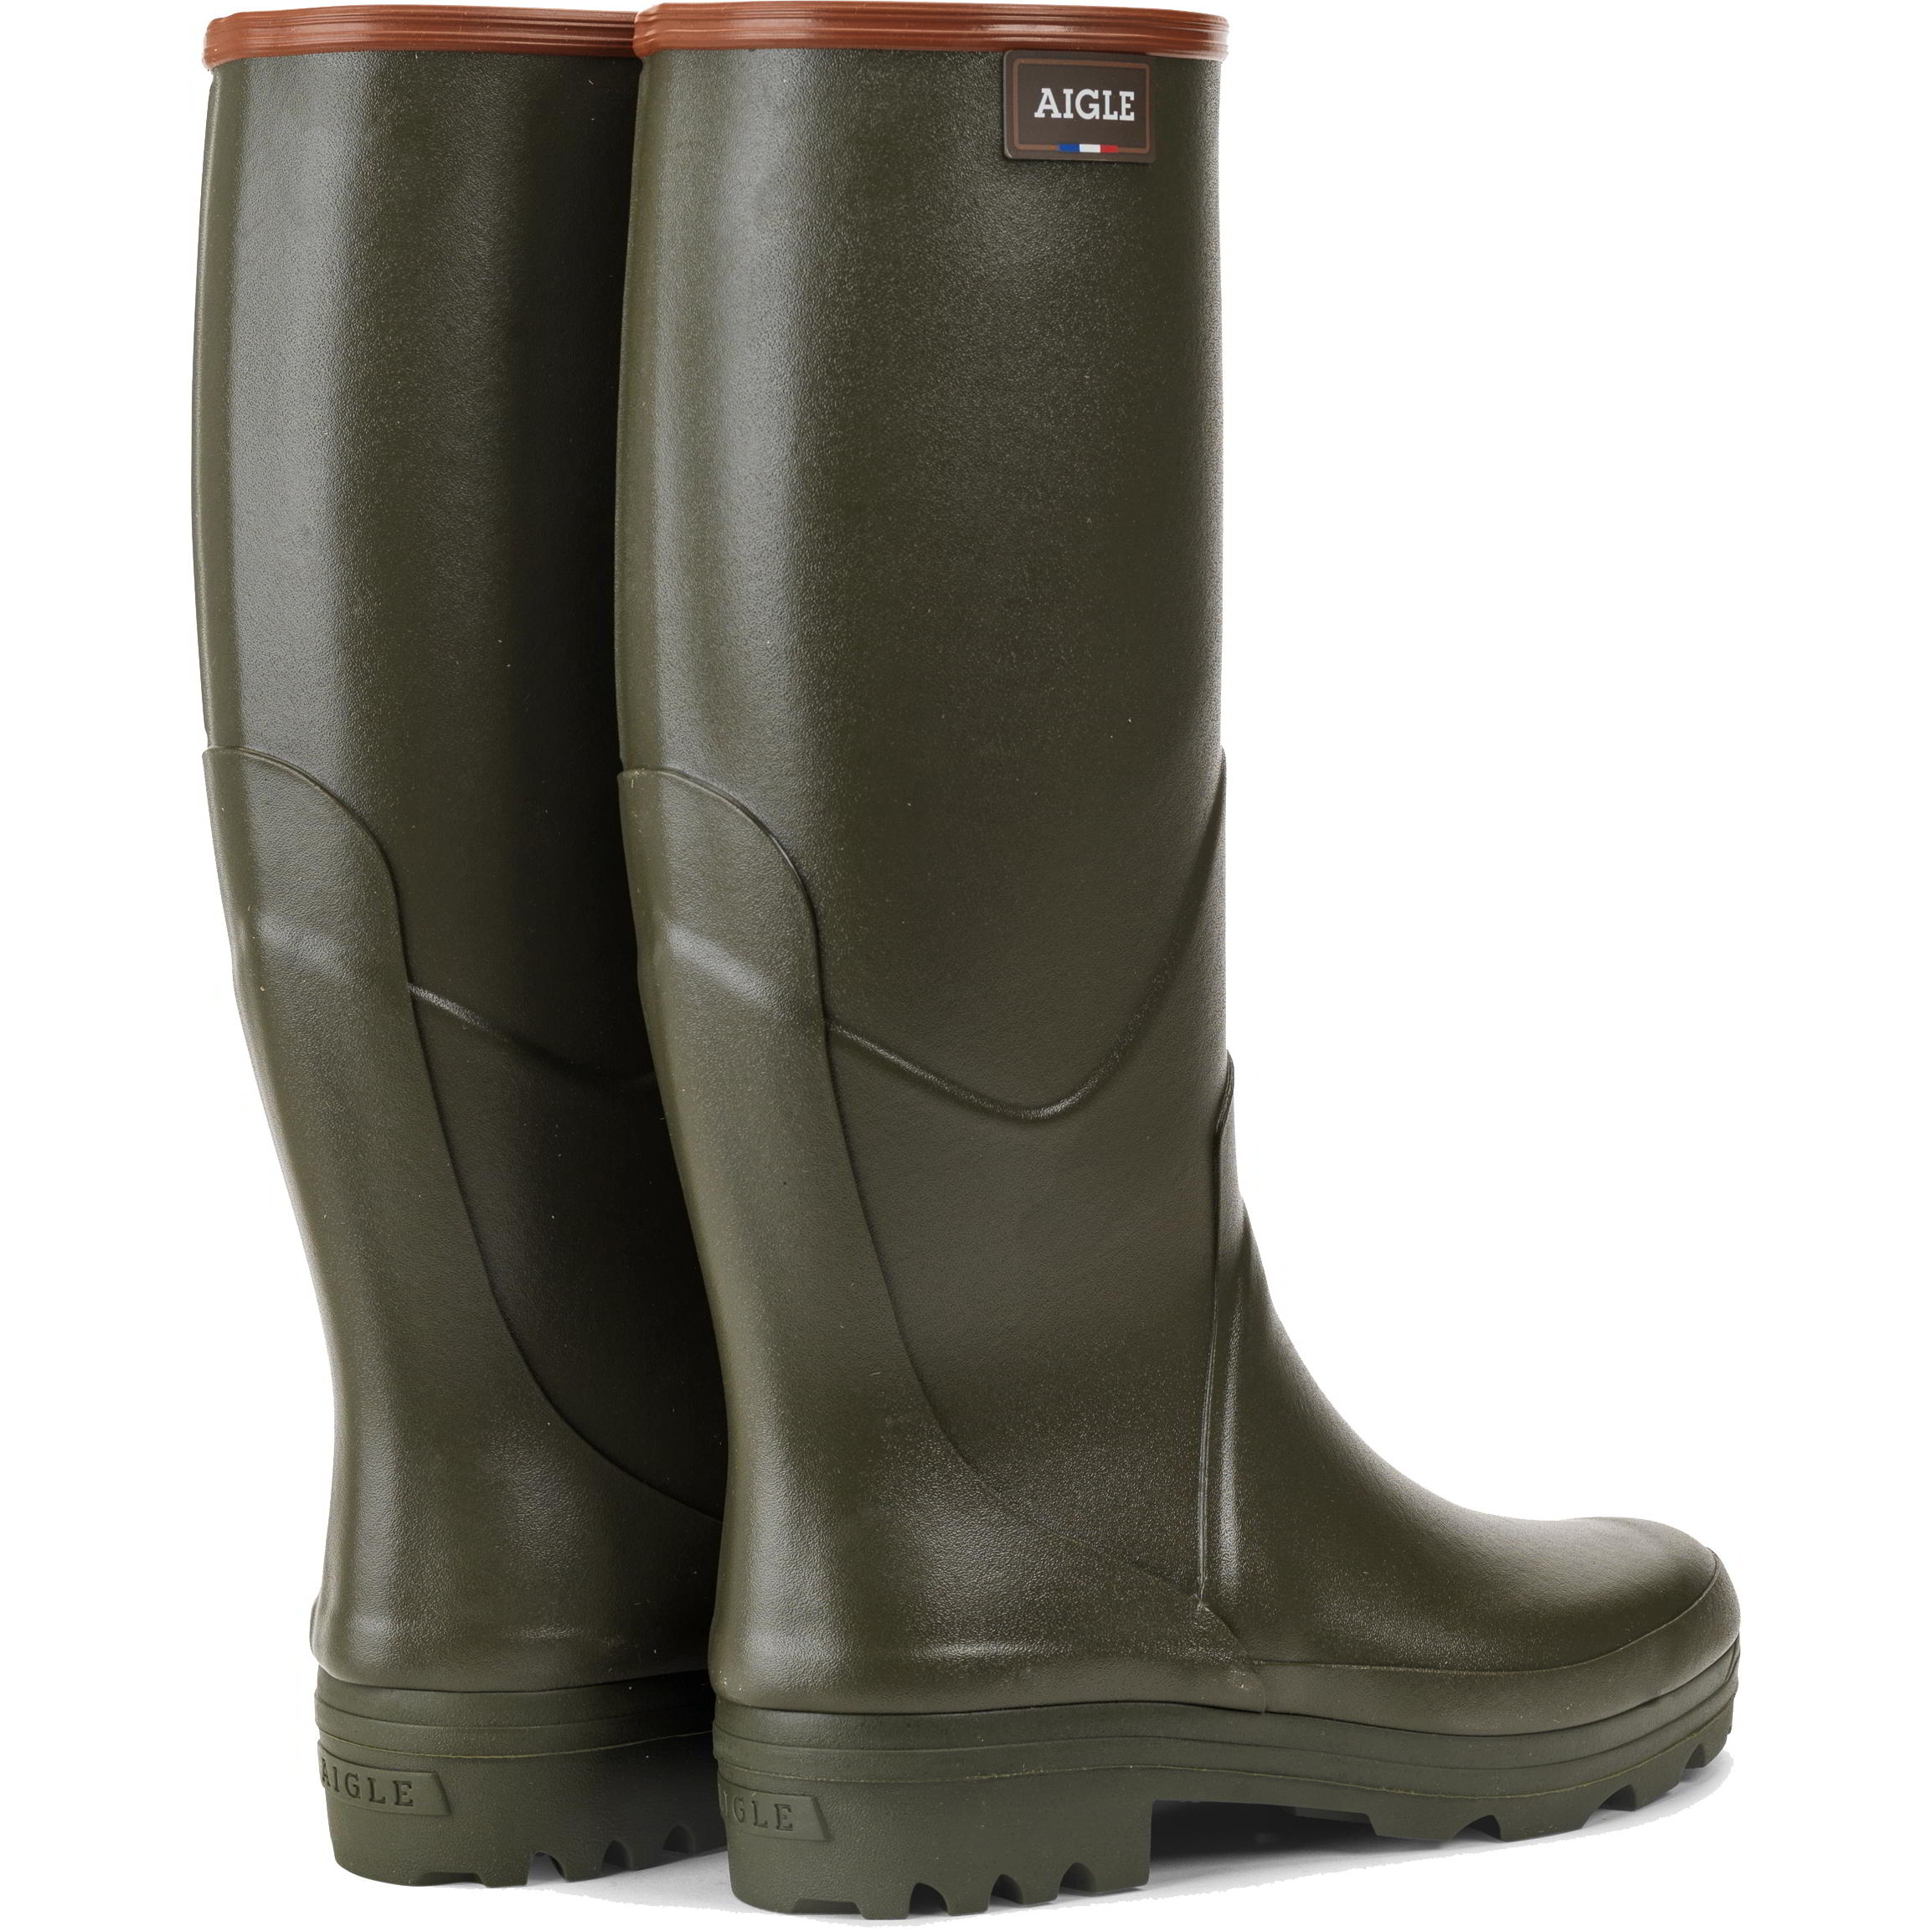 Aigle Mens Chambord Pro 2 Wellies Rain Boots - UK 10.5 Green 2951